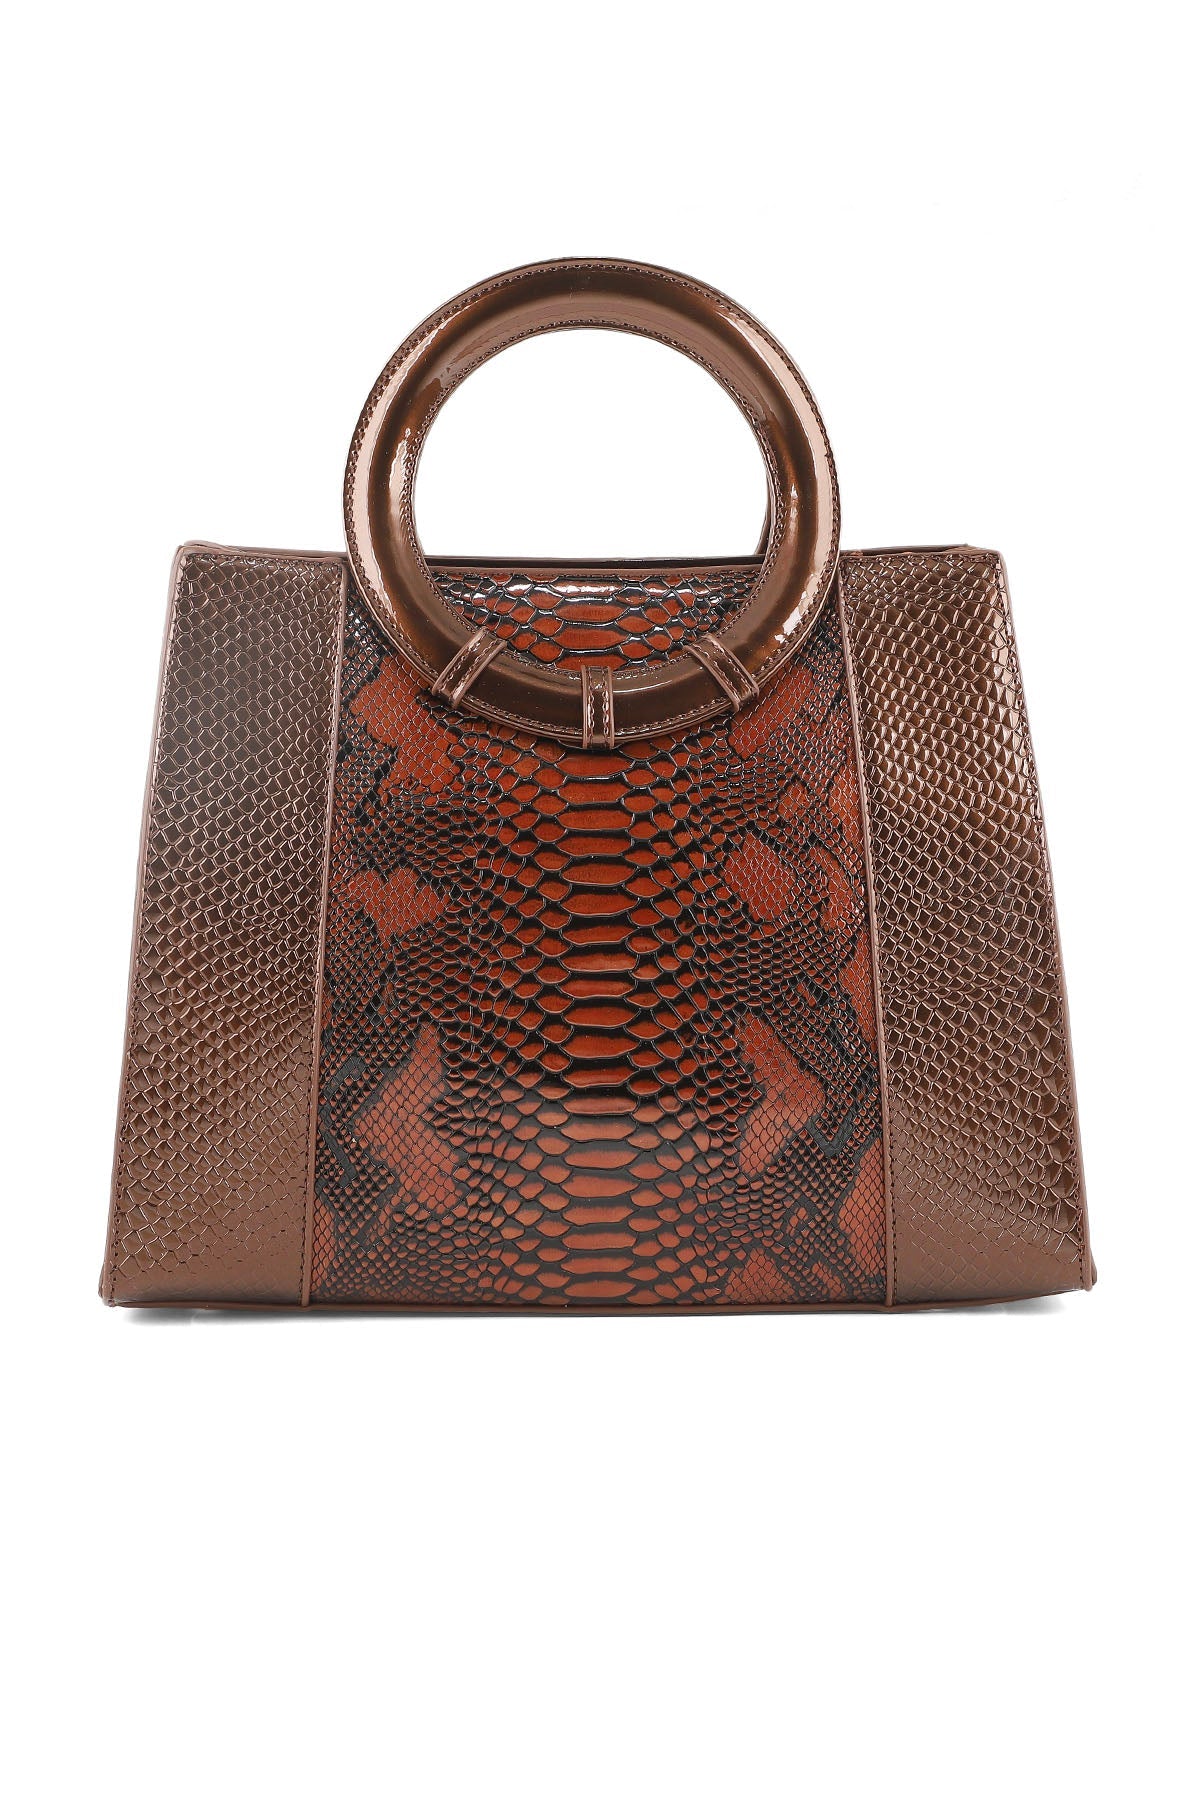 Top Handle Hand Bags B14996-Brown